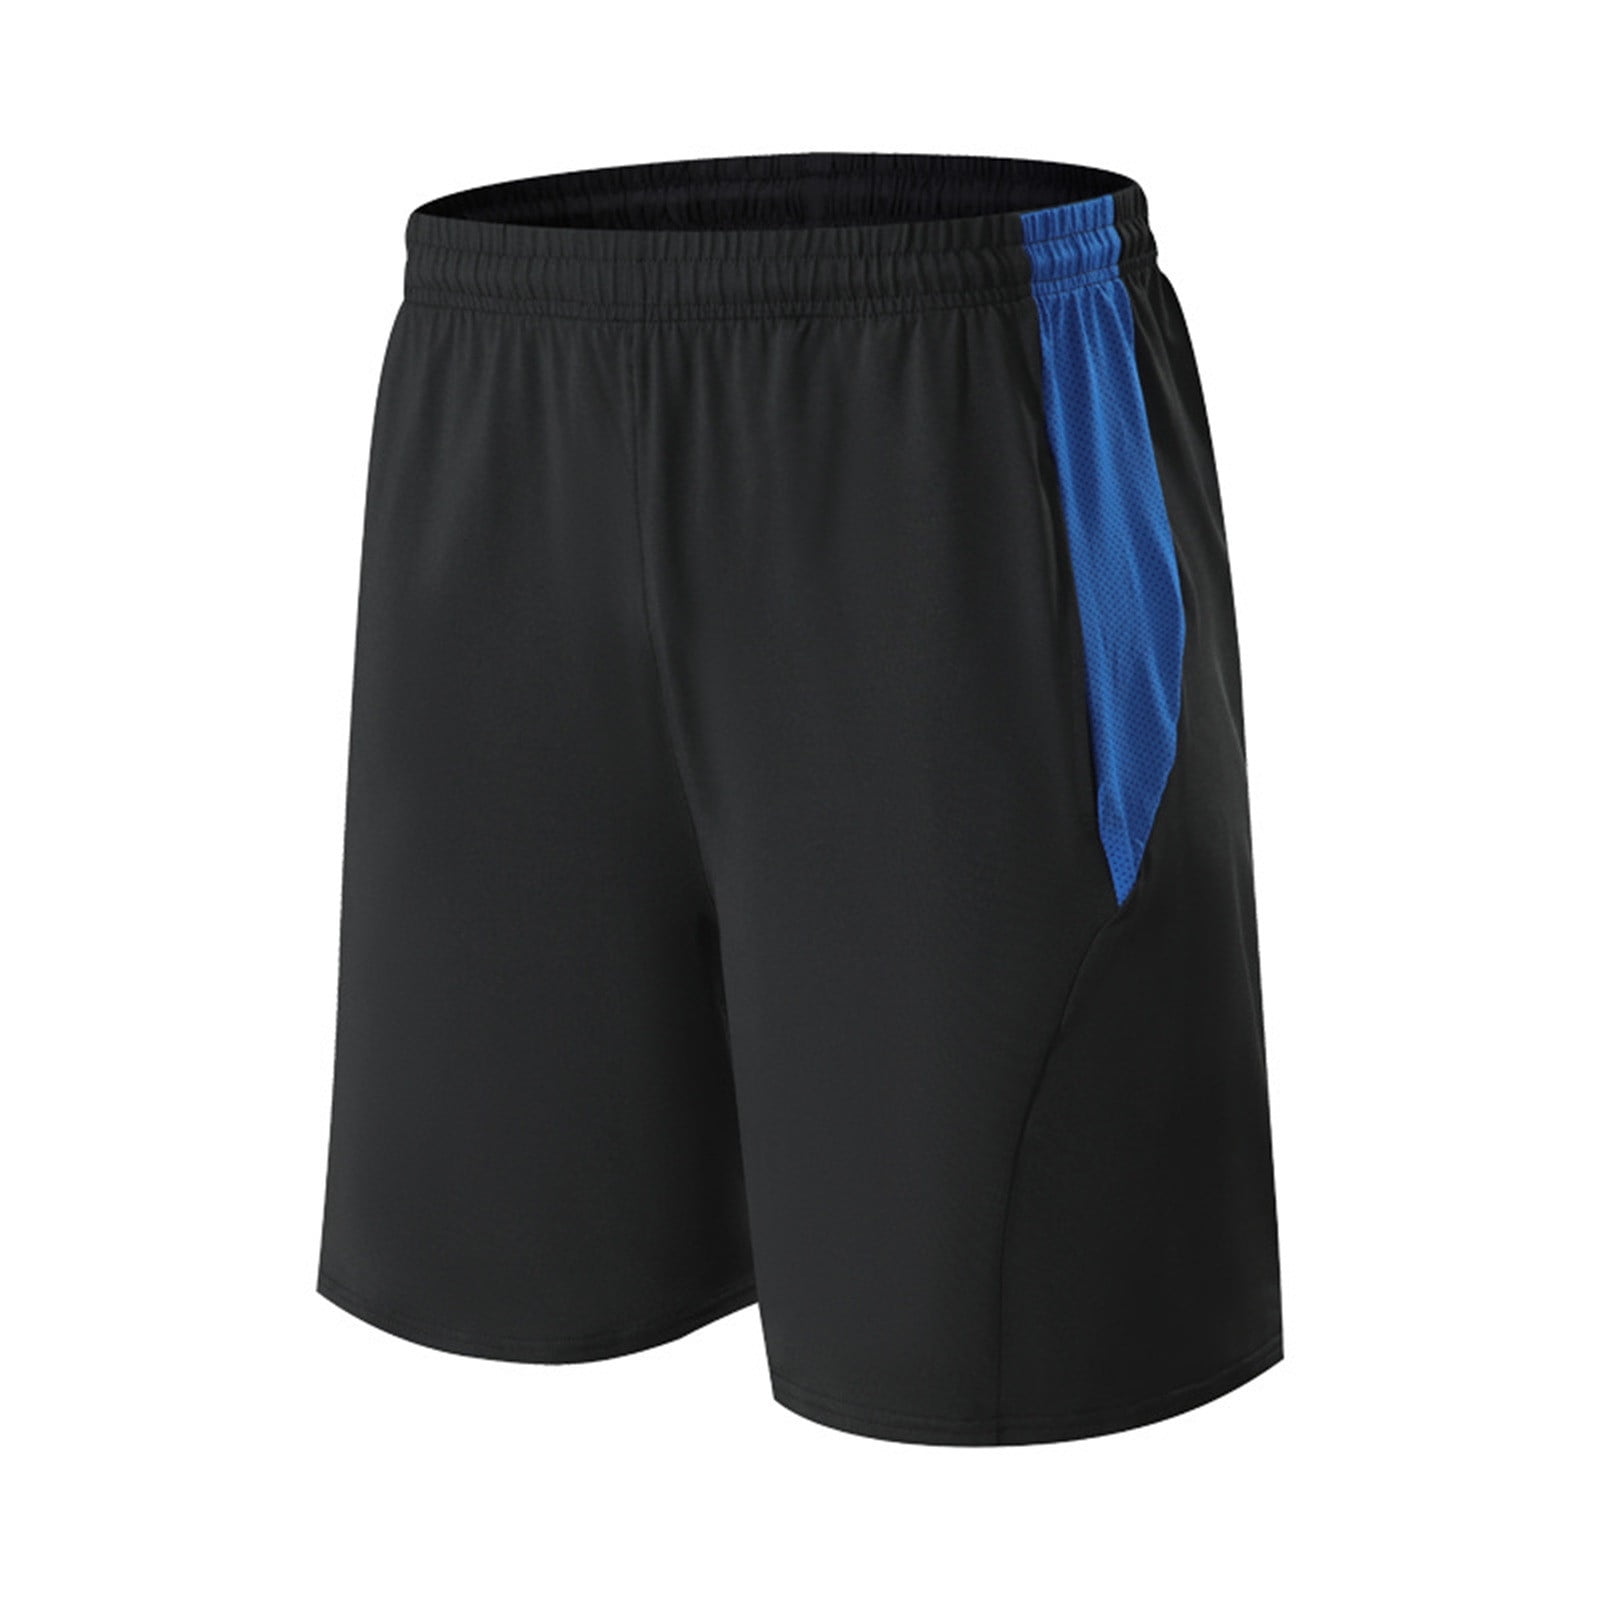 Pedort Shorts For Men Plus Size Mens Shorts Shorts for Men Casual,Men's ...